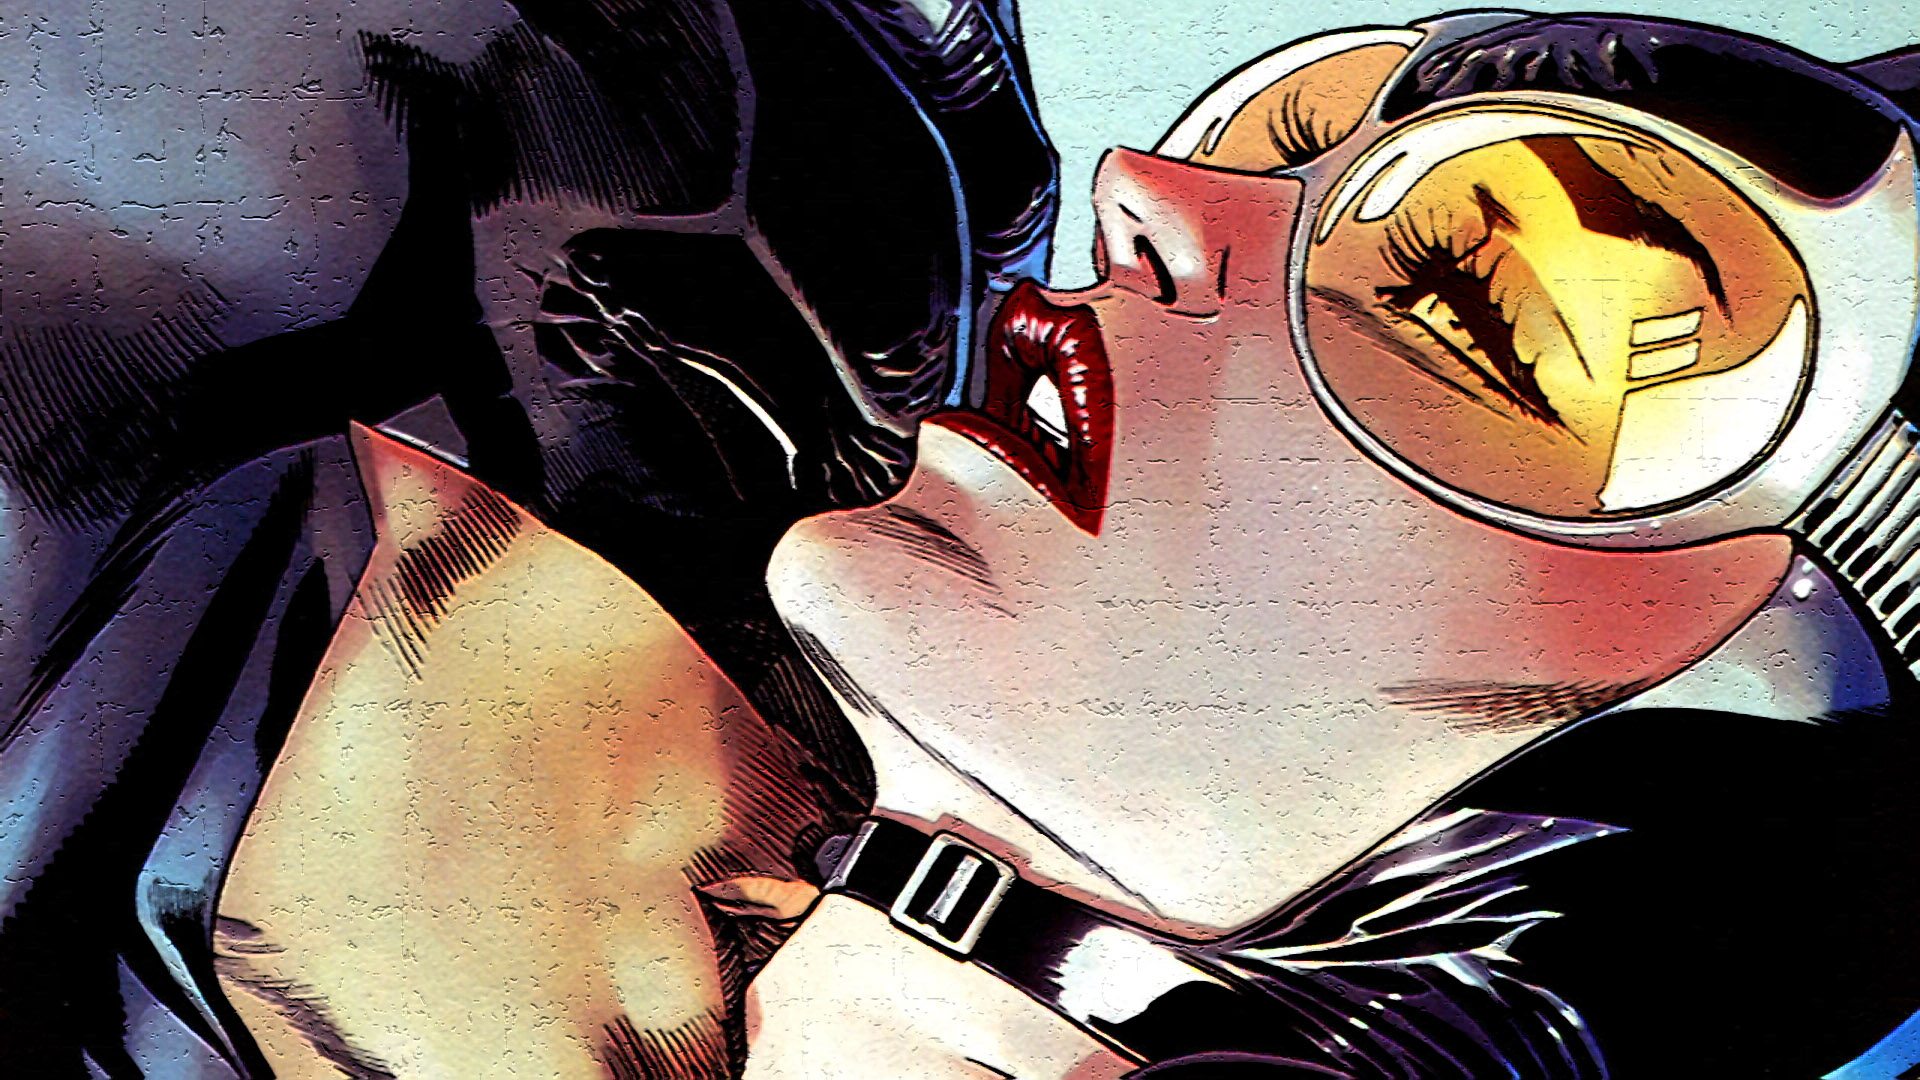 Скачать обои бесплатно Комиксы, Бэтмен, Женщина Кошка картинка на рабочий стол ПК